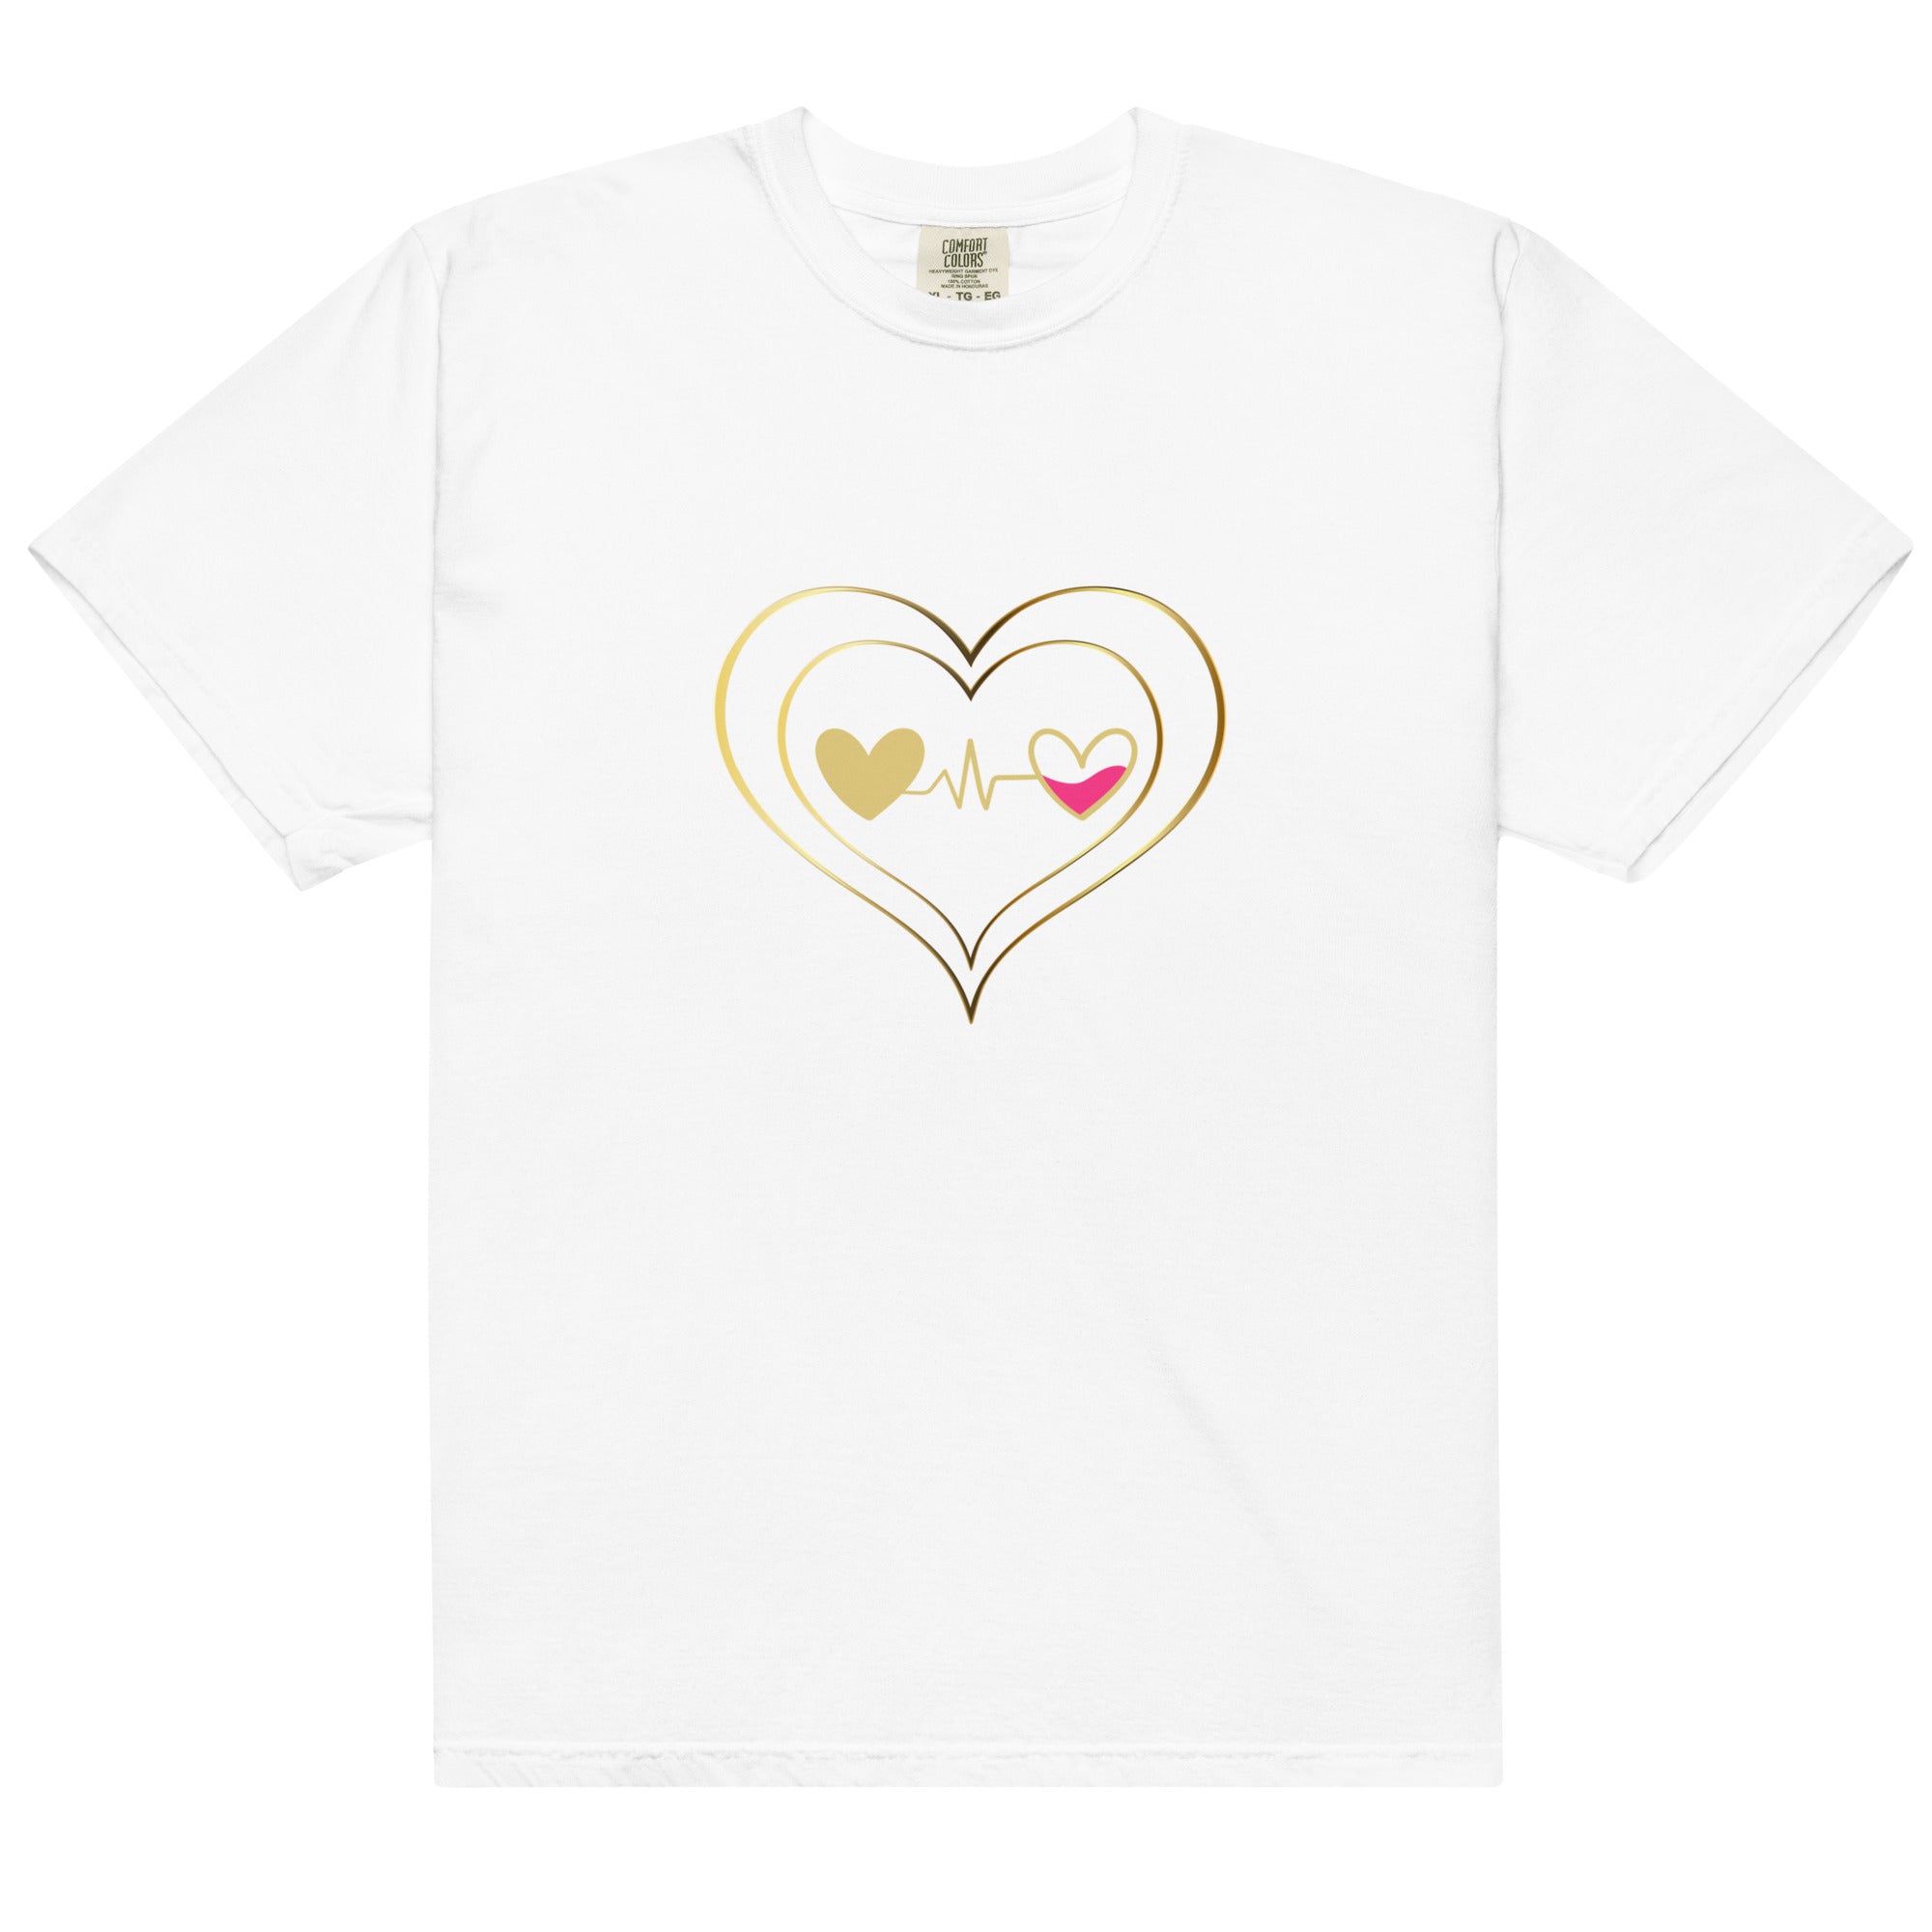 Connected Heart Unisex garment-dyed heavyweight t-shirt